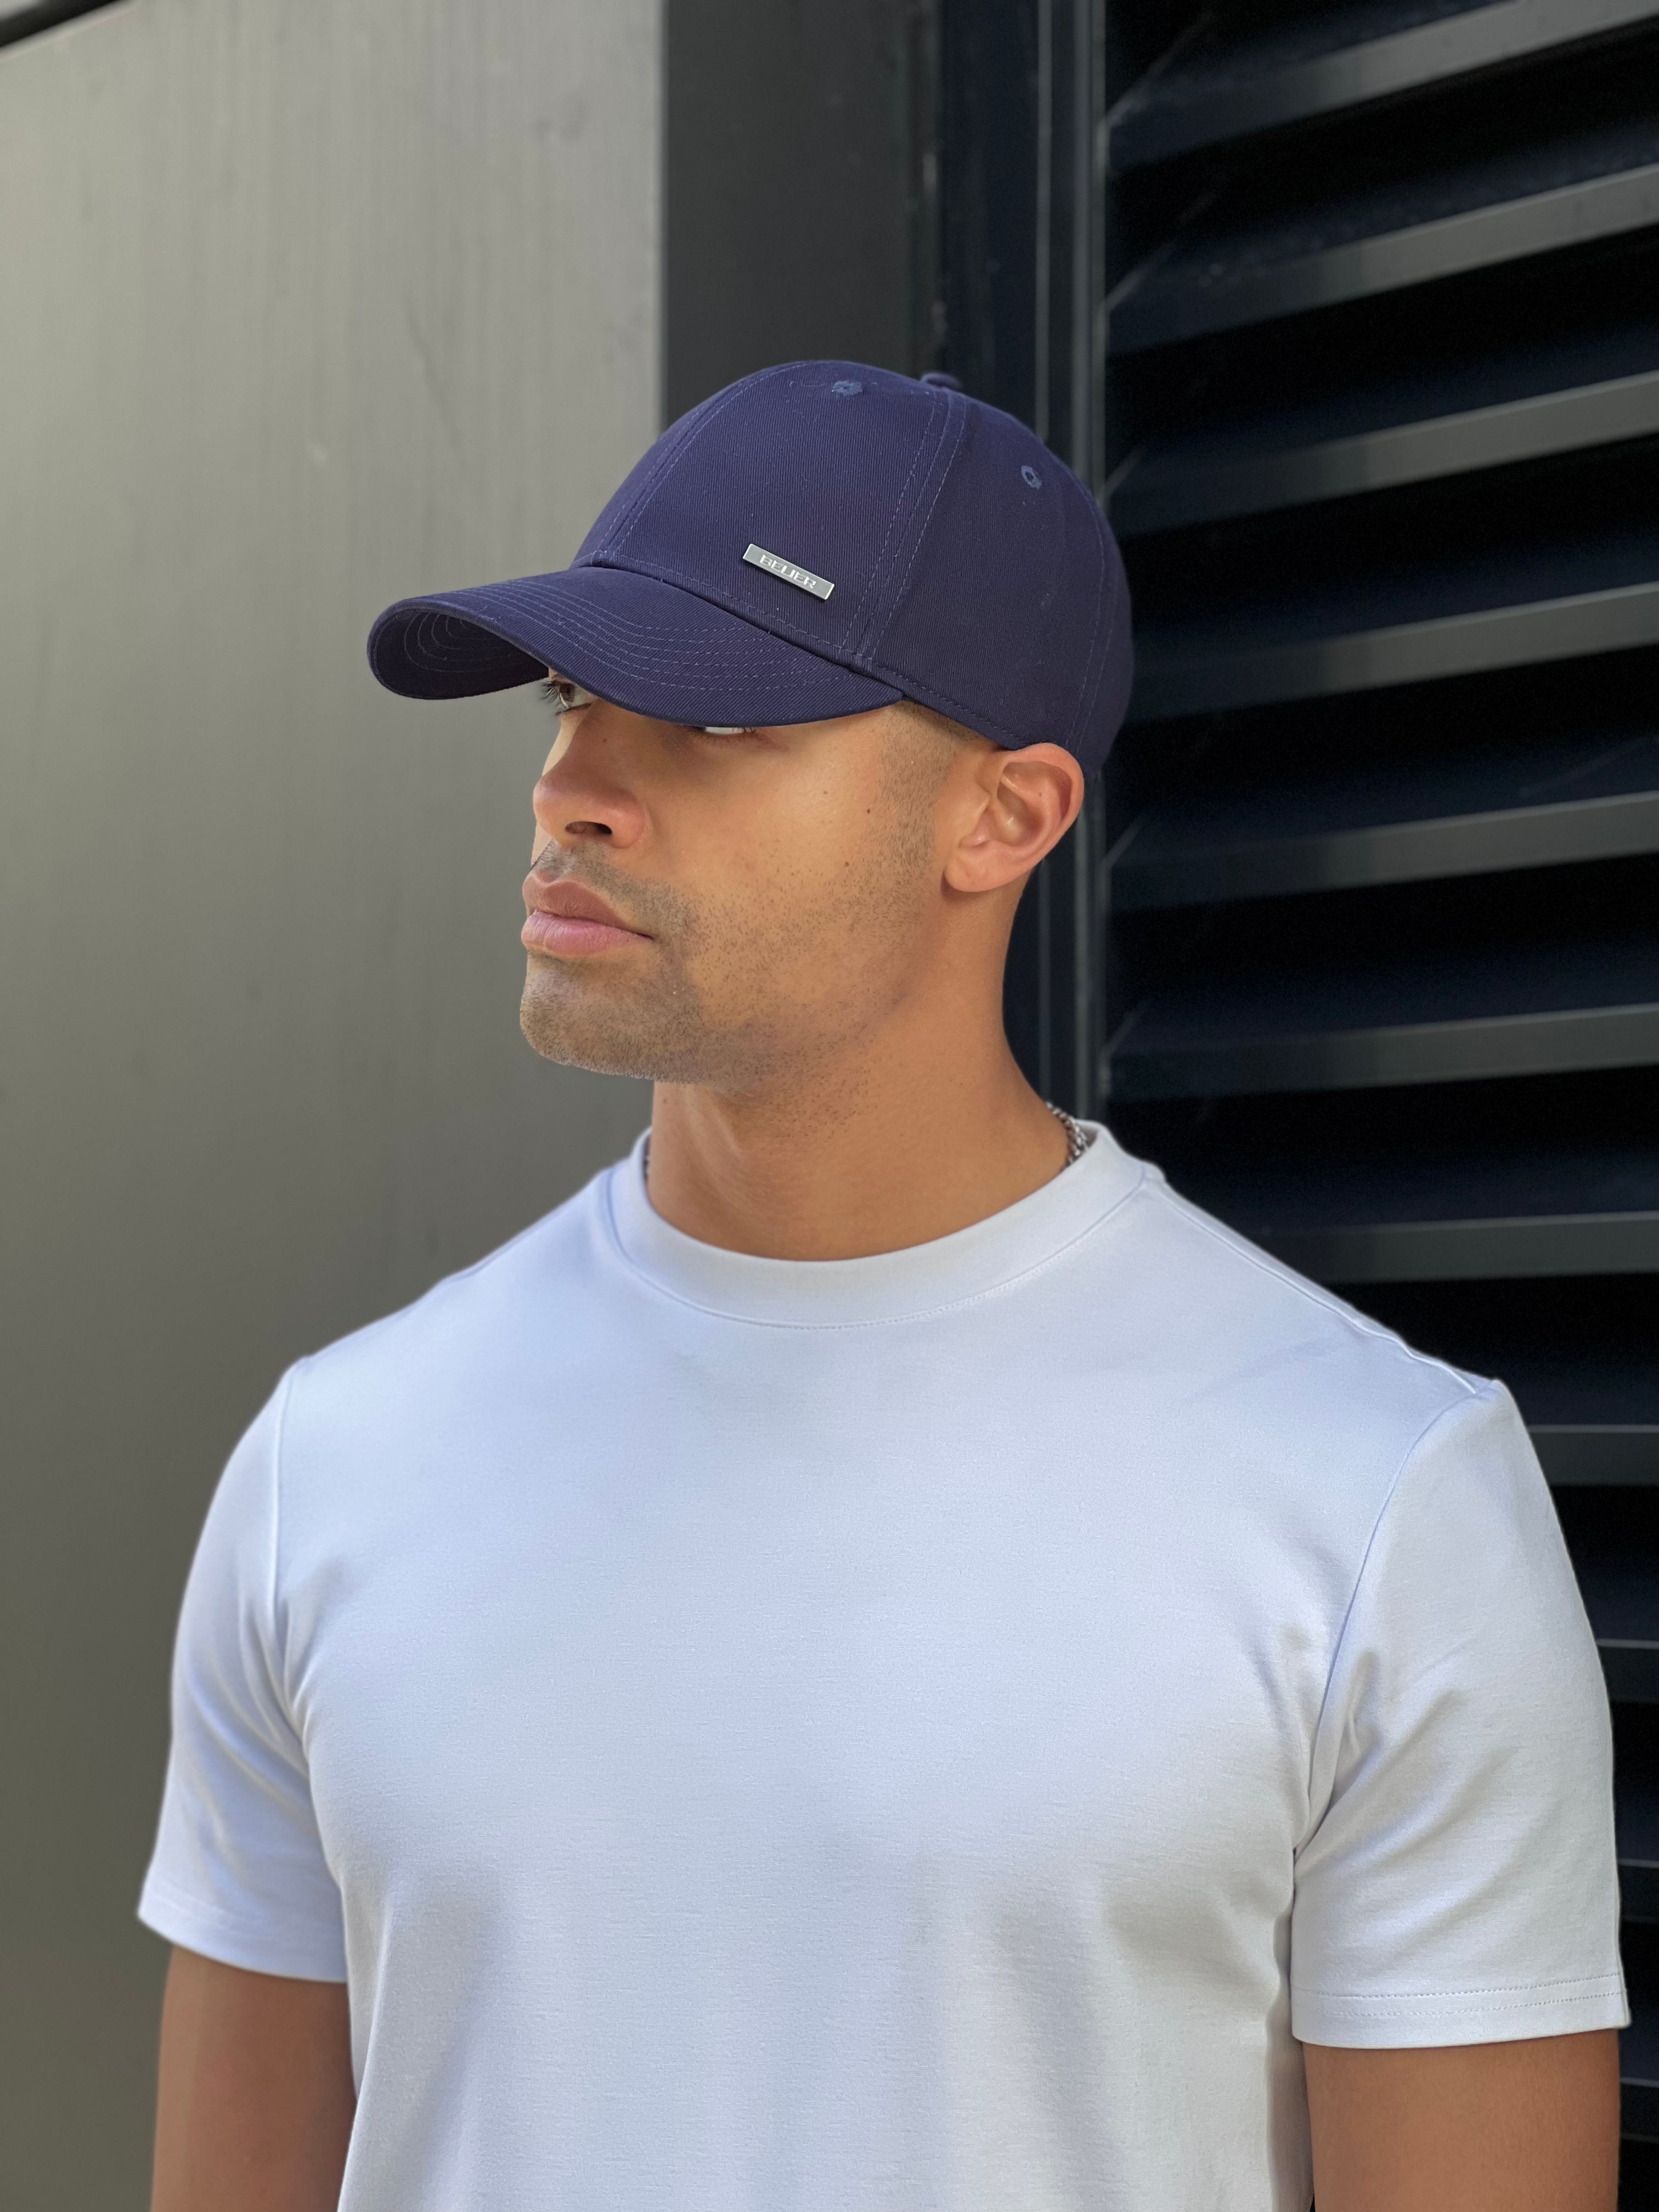 Men's Smart Caps, Headwear for Men